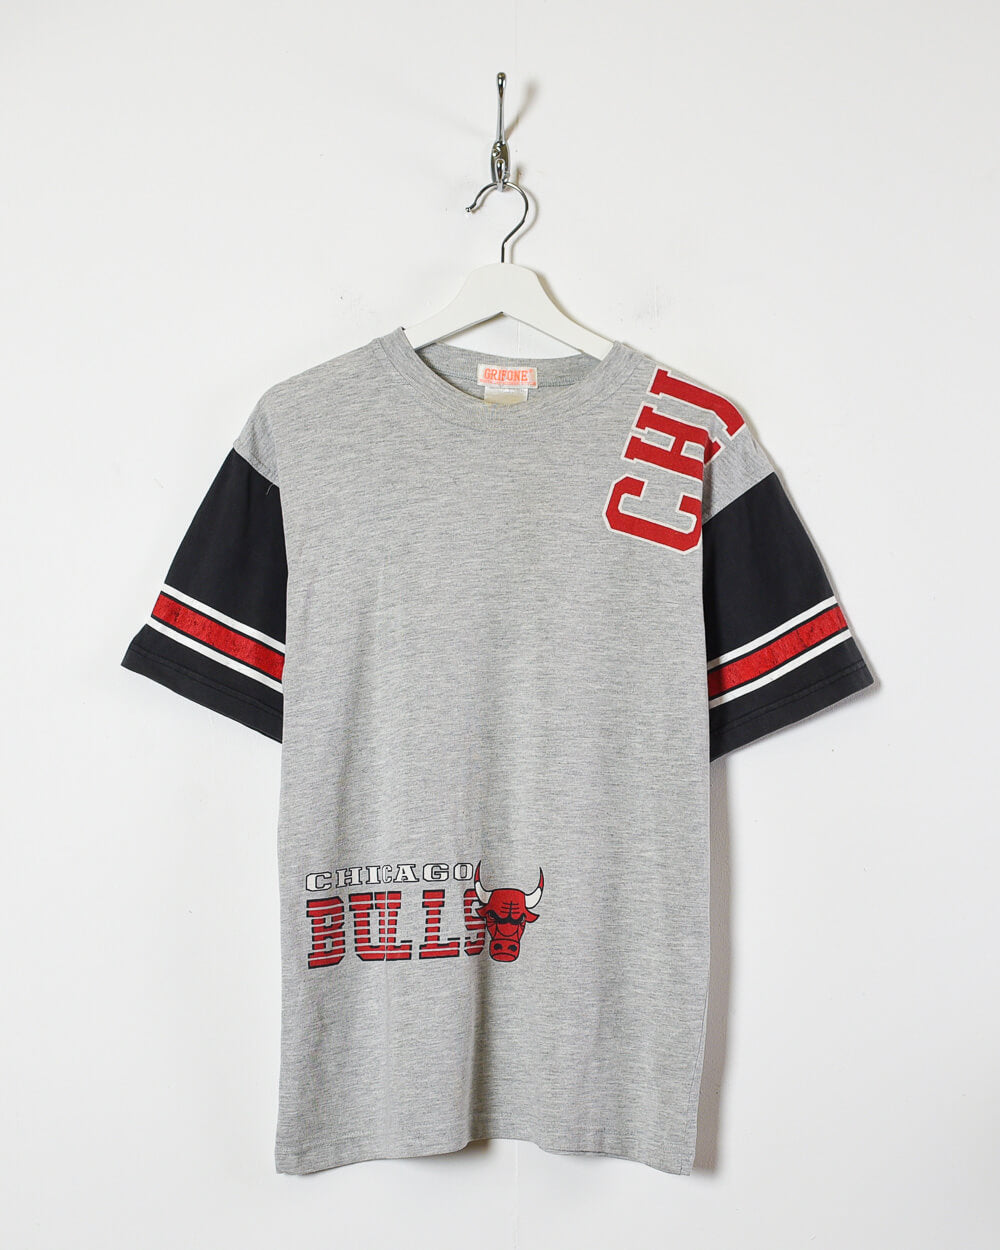 Vintage 90s Nba Chicago Bulls Shirt - High-Quality Printed Brand